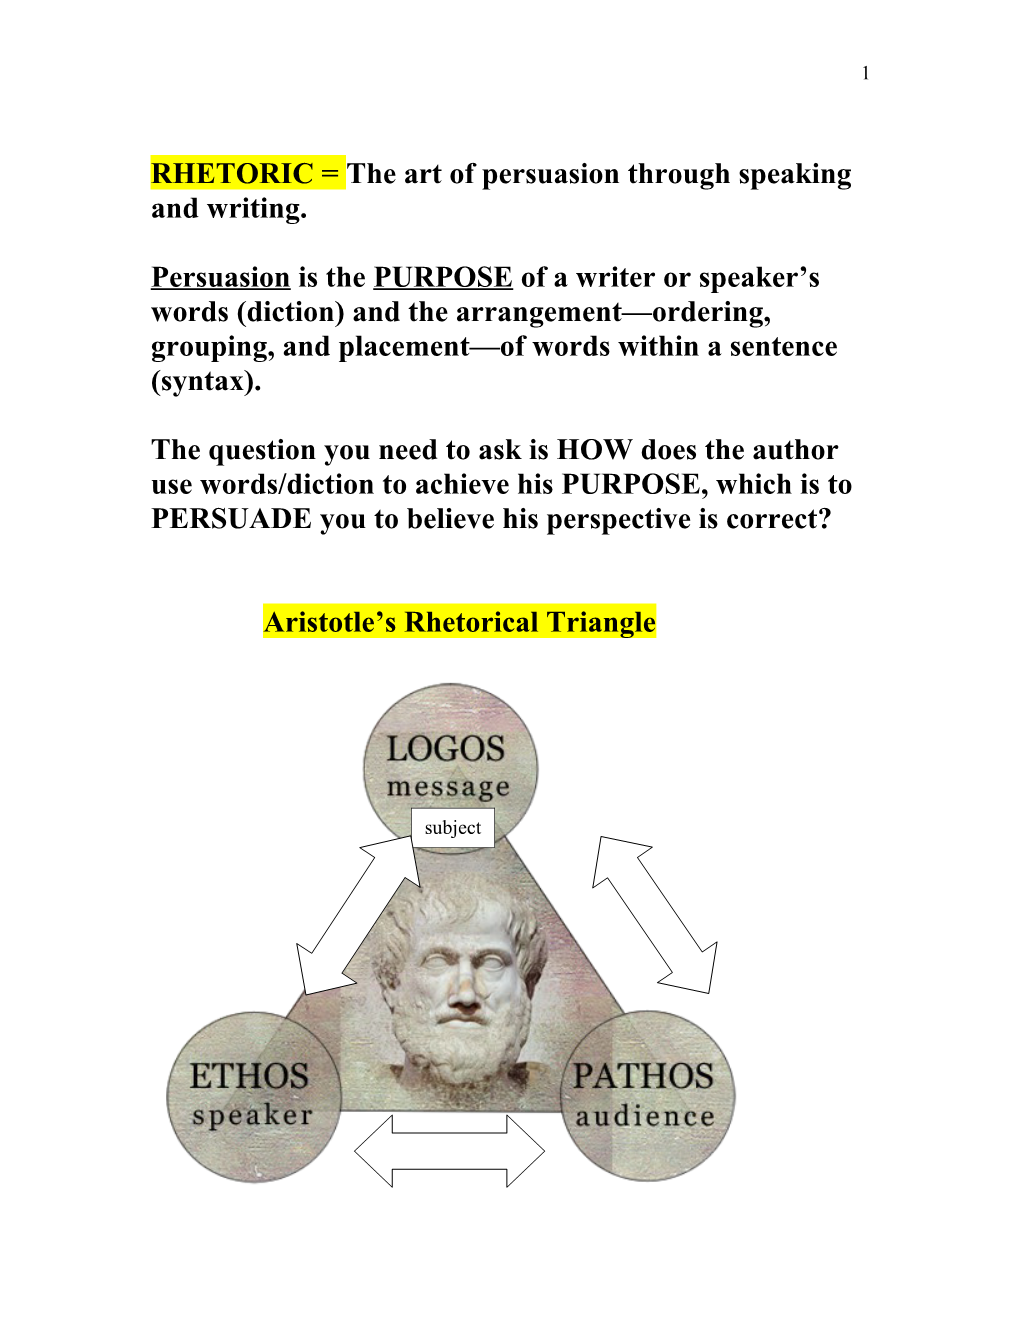 RHETORIC = the Art of Persuasion Through Speaking and Writing